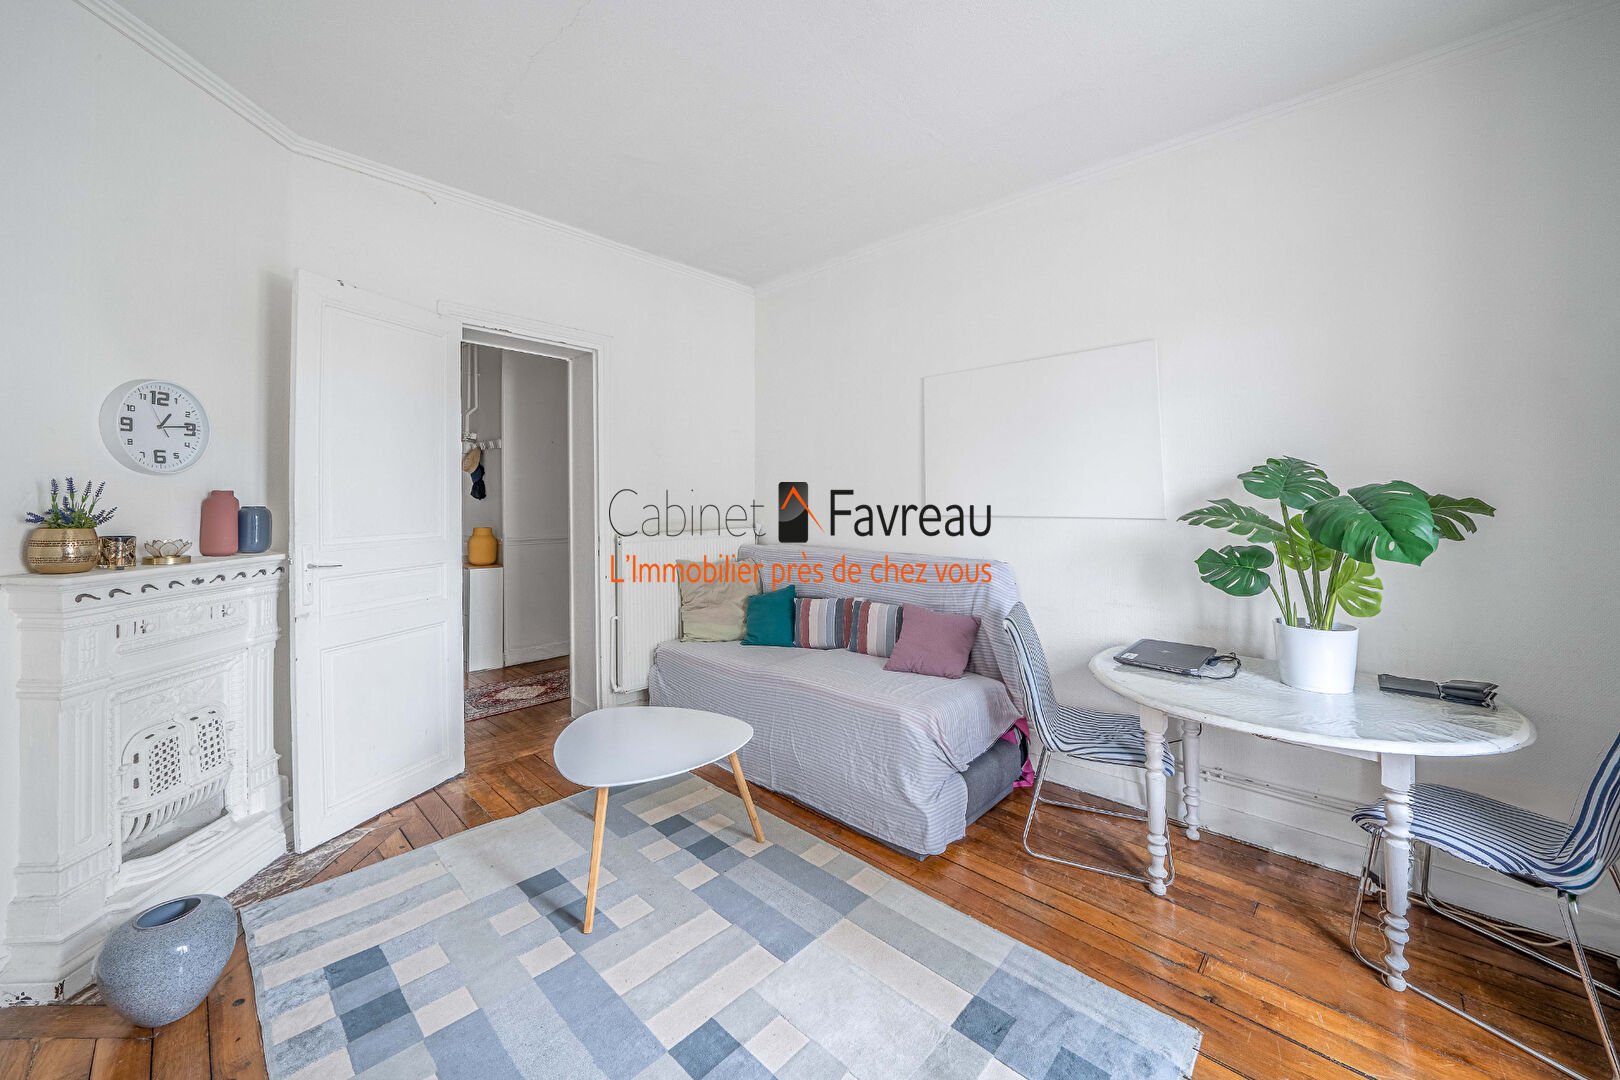 Appartement a vendre malakoff - 2 pièce(s) - 47.08 m2 - Surfyn